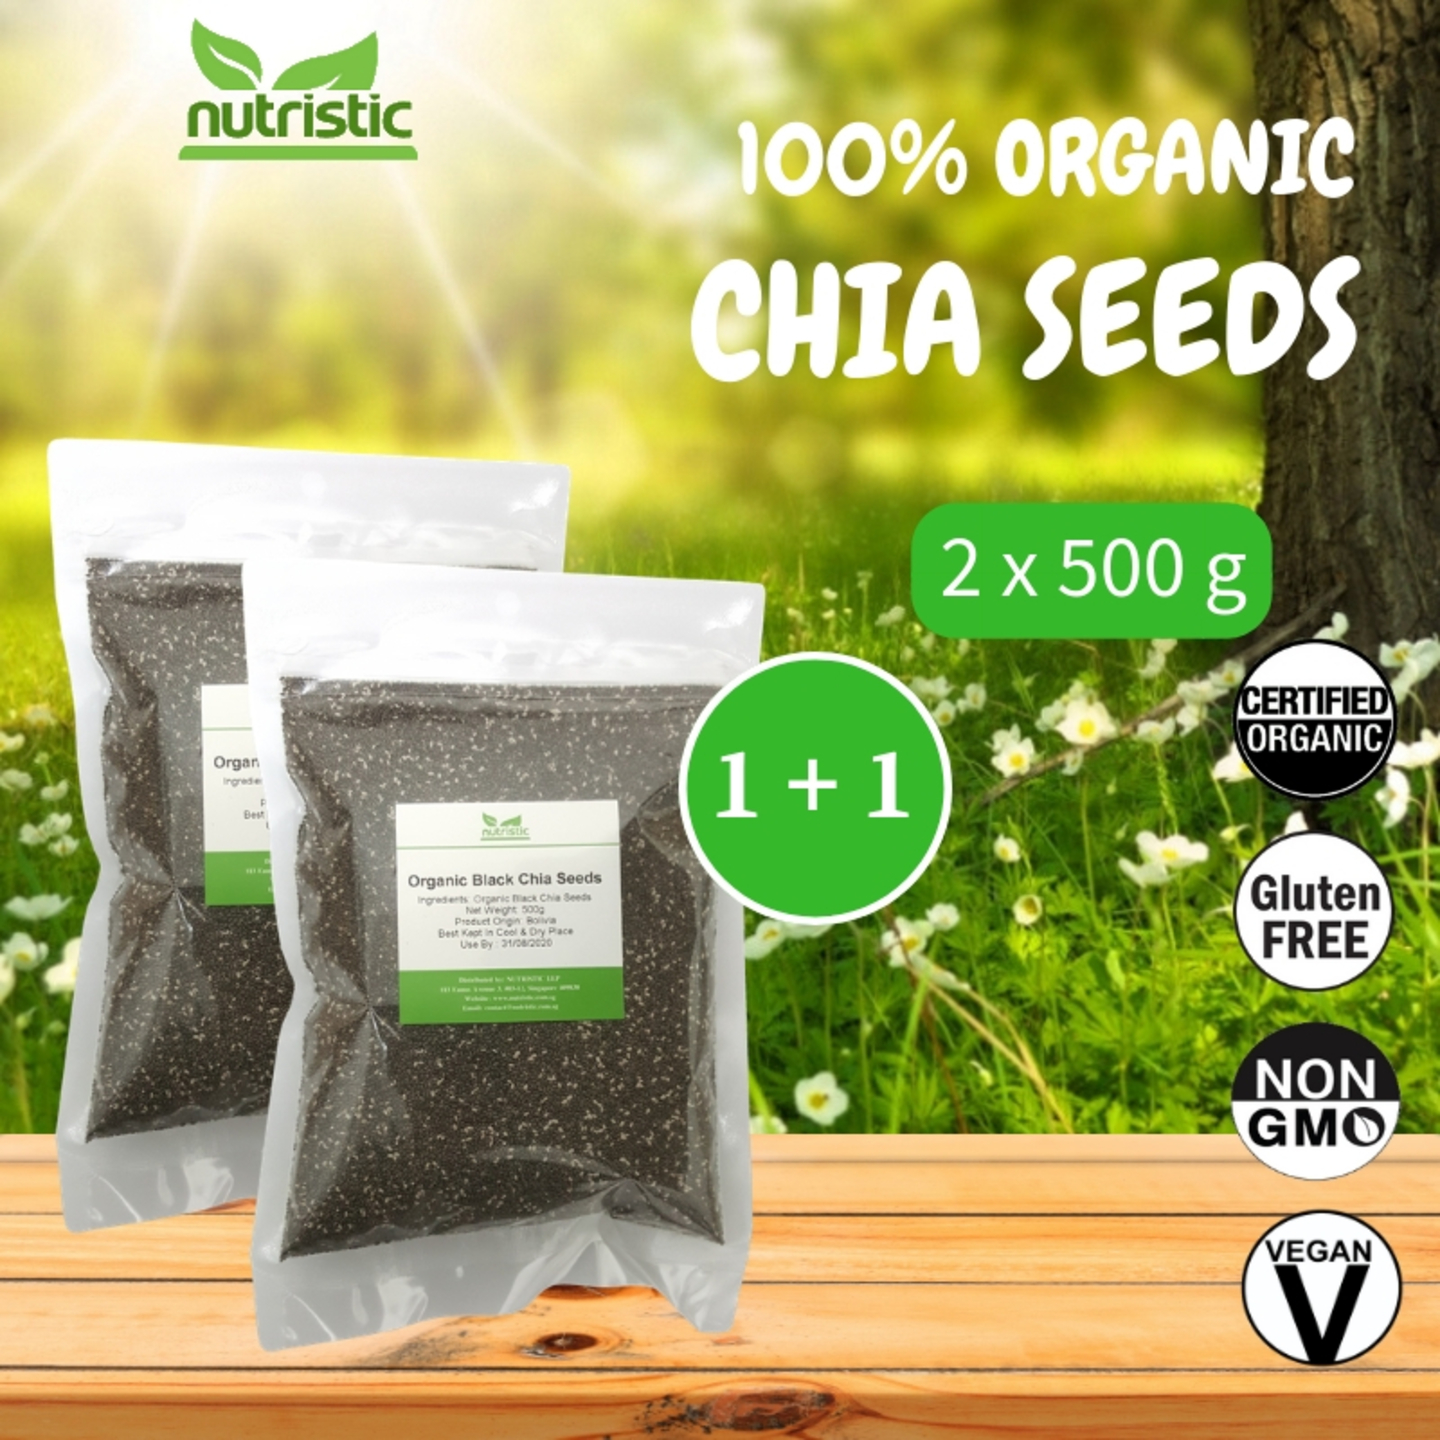 Organic Chia Seeds 500g x2 - Value Bundle 1+1